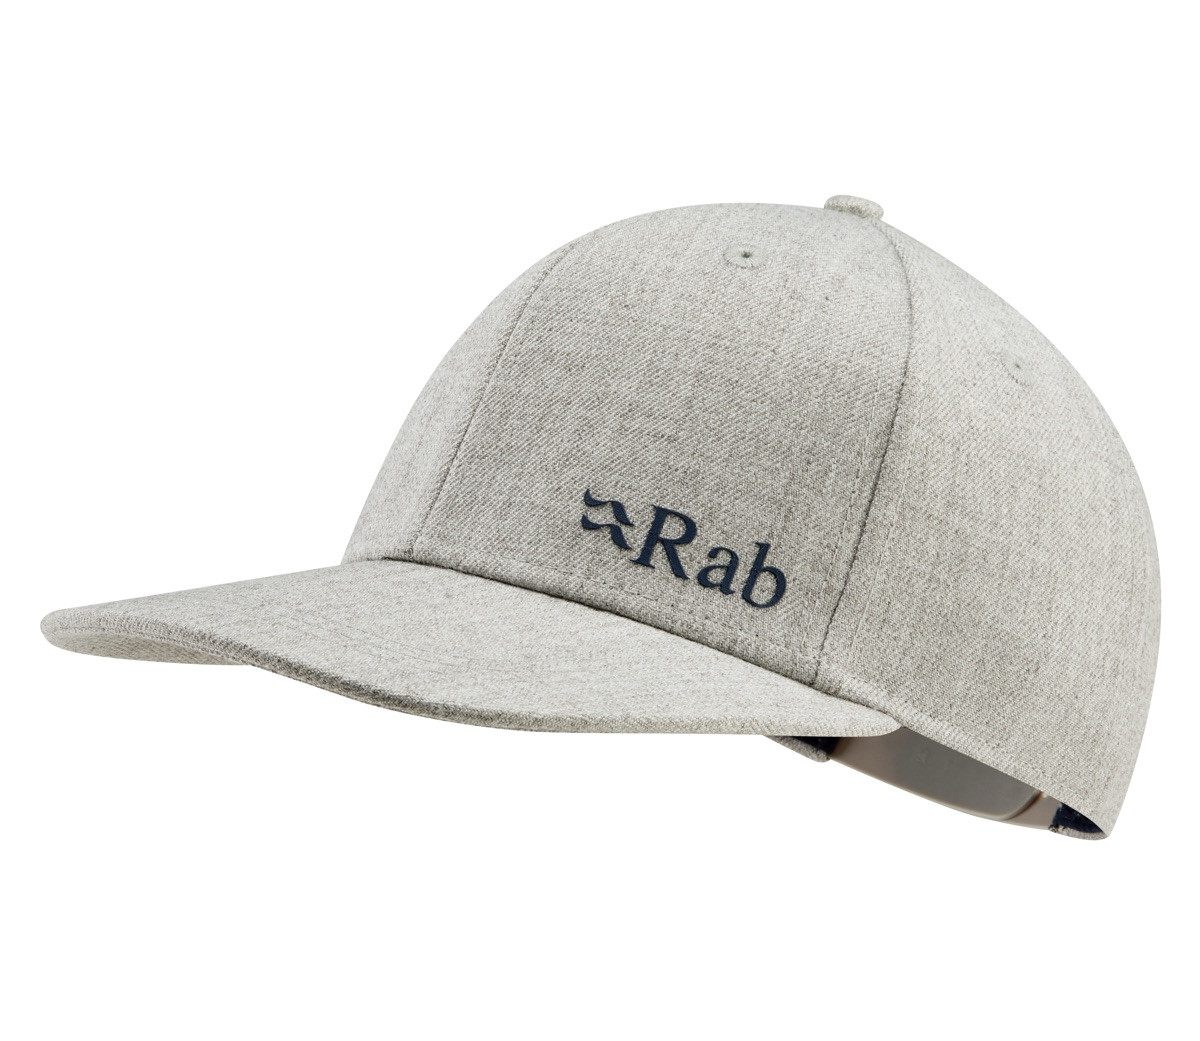 Rab Flatroin logo cap grey